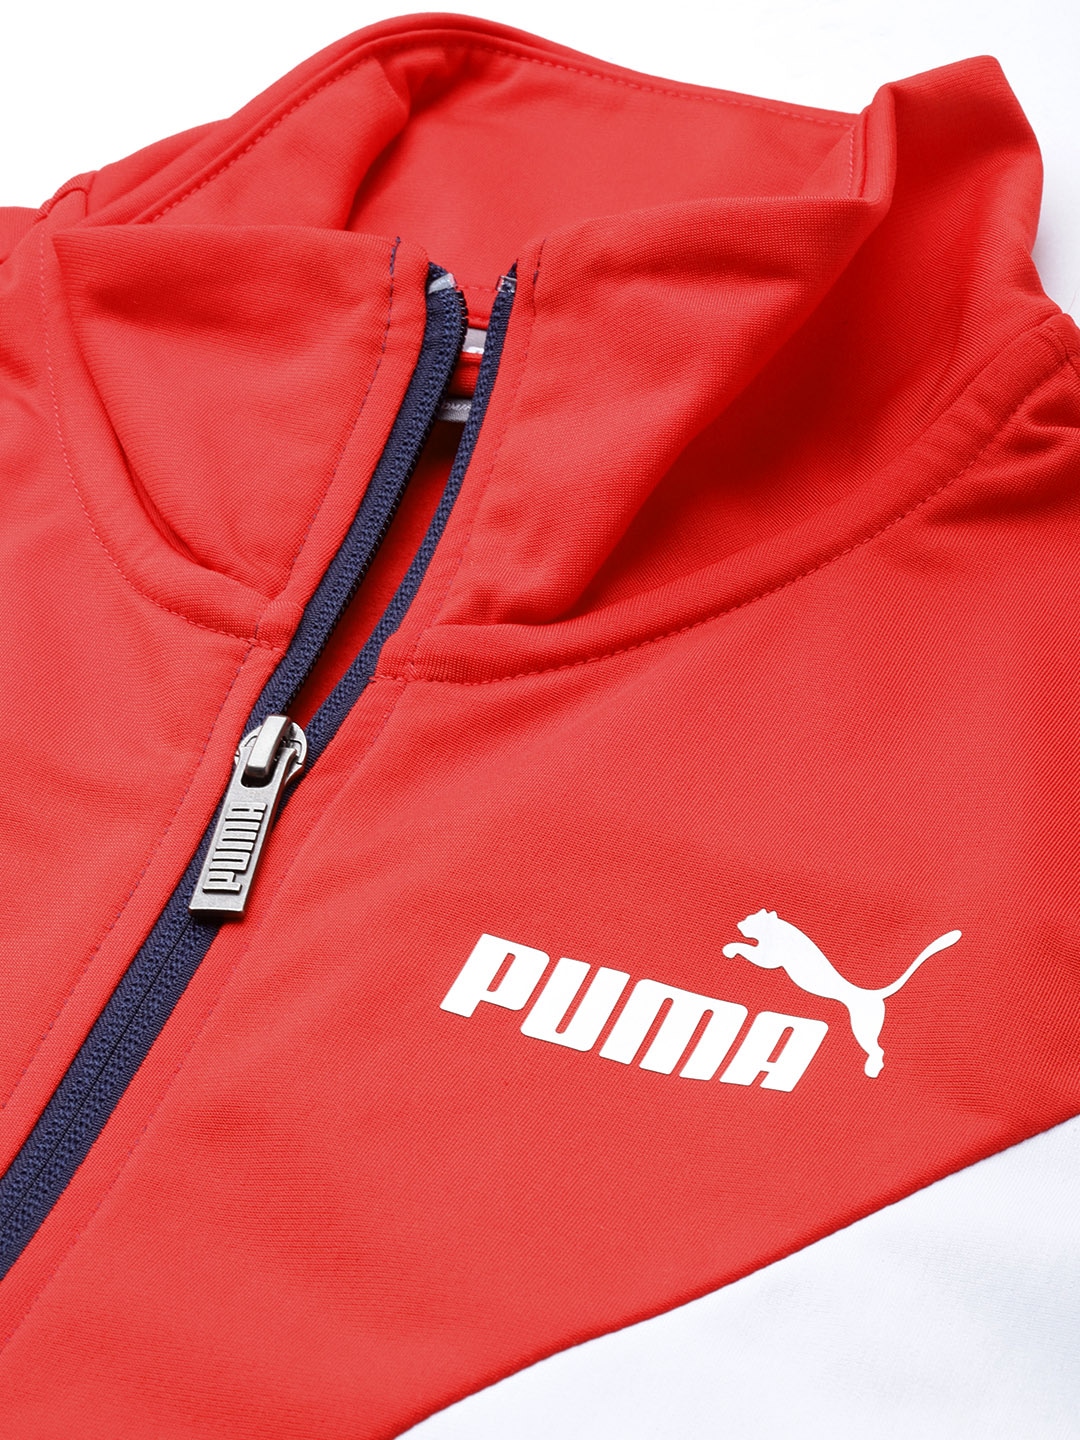 Clothing Tracksuits | Puma Men Navy Blue & Red Colourblocked  Tracksuits - HG47028